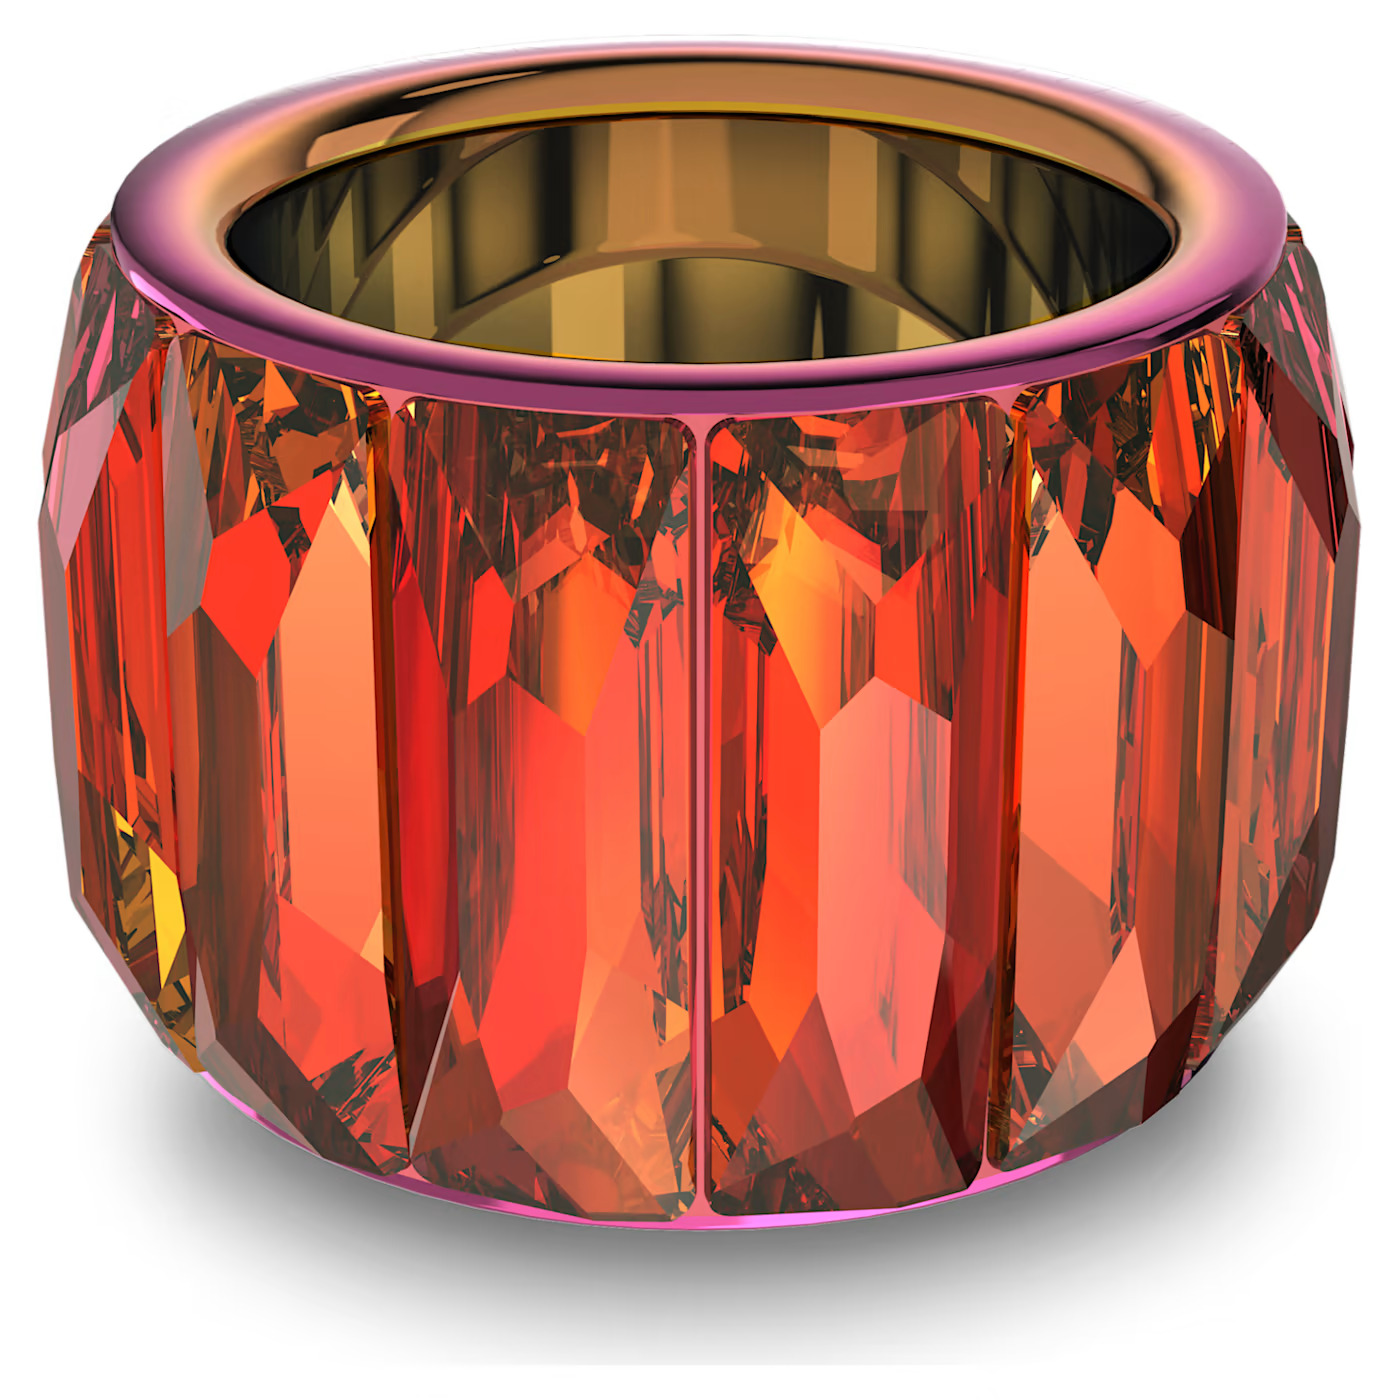 Swarovski Curiosa cocktail ring Baguette cut Pink Size 55 #5599892 $225 New Box